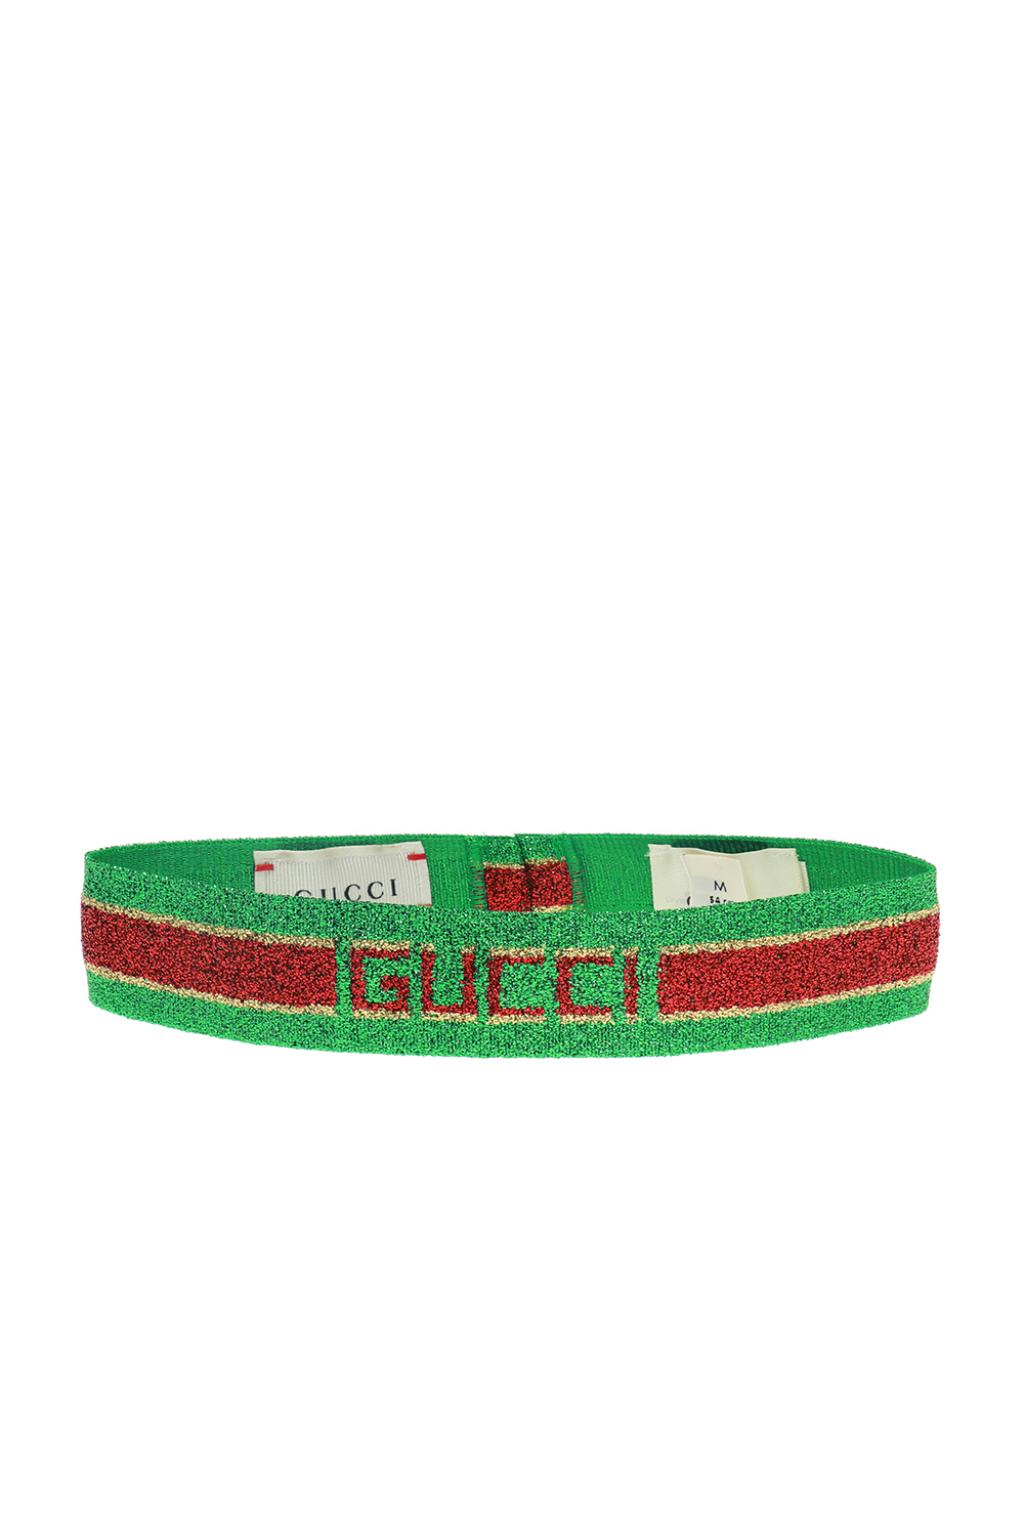 gucci green headband